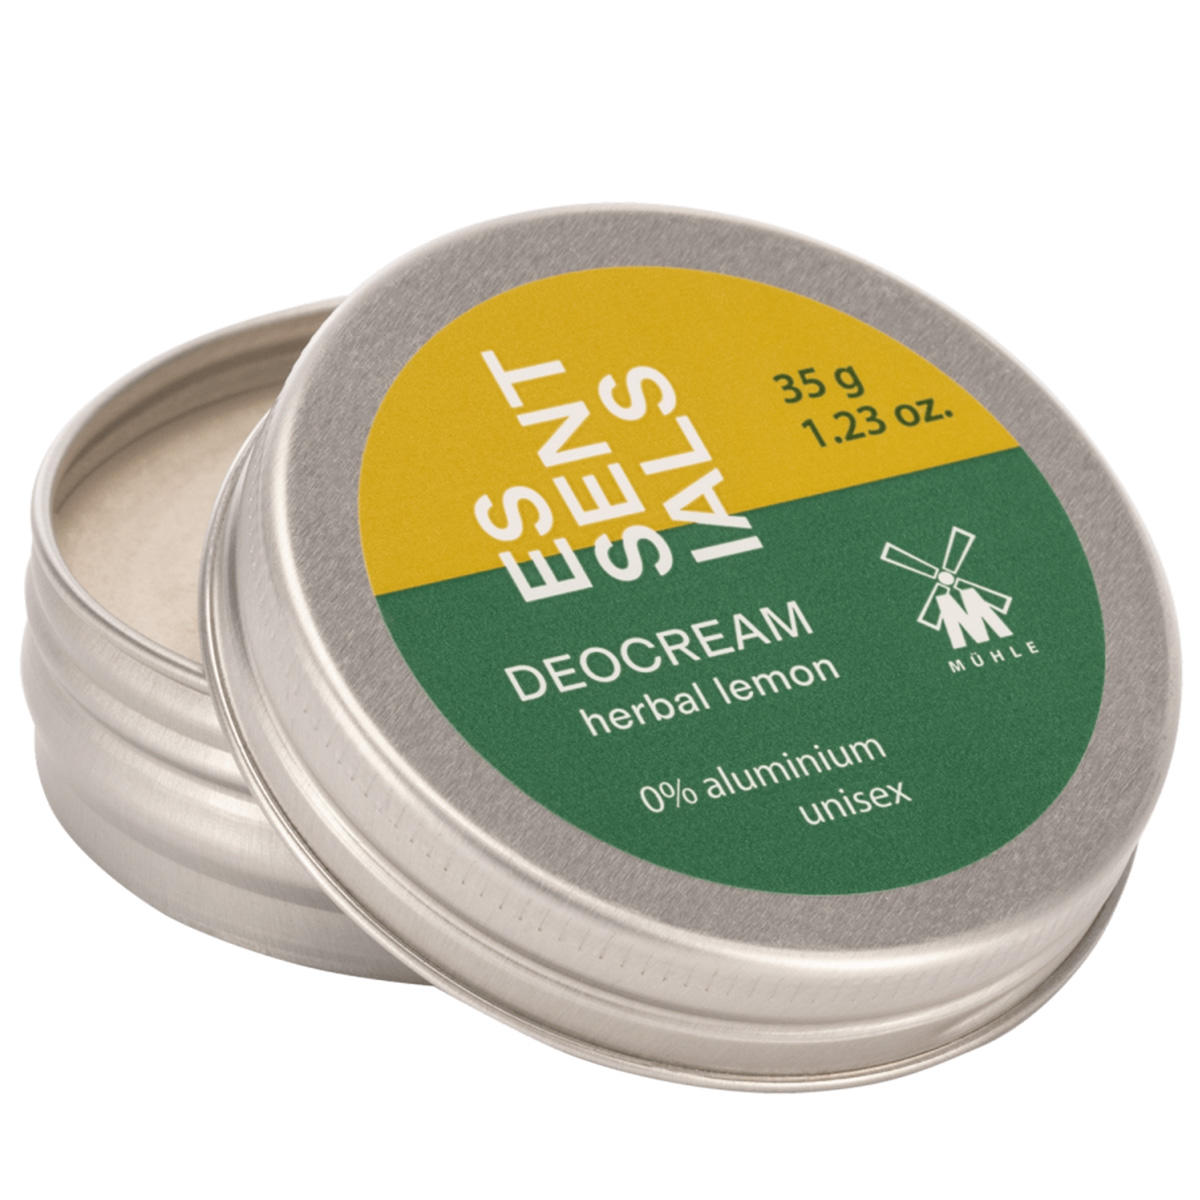 MÜHLE ESSENTIALS Crema desodorante Herbal Lemon 35 g - 3